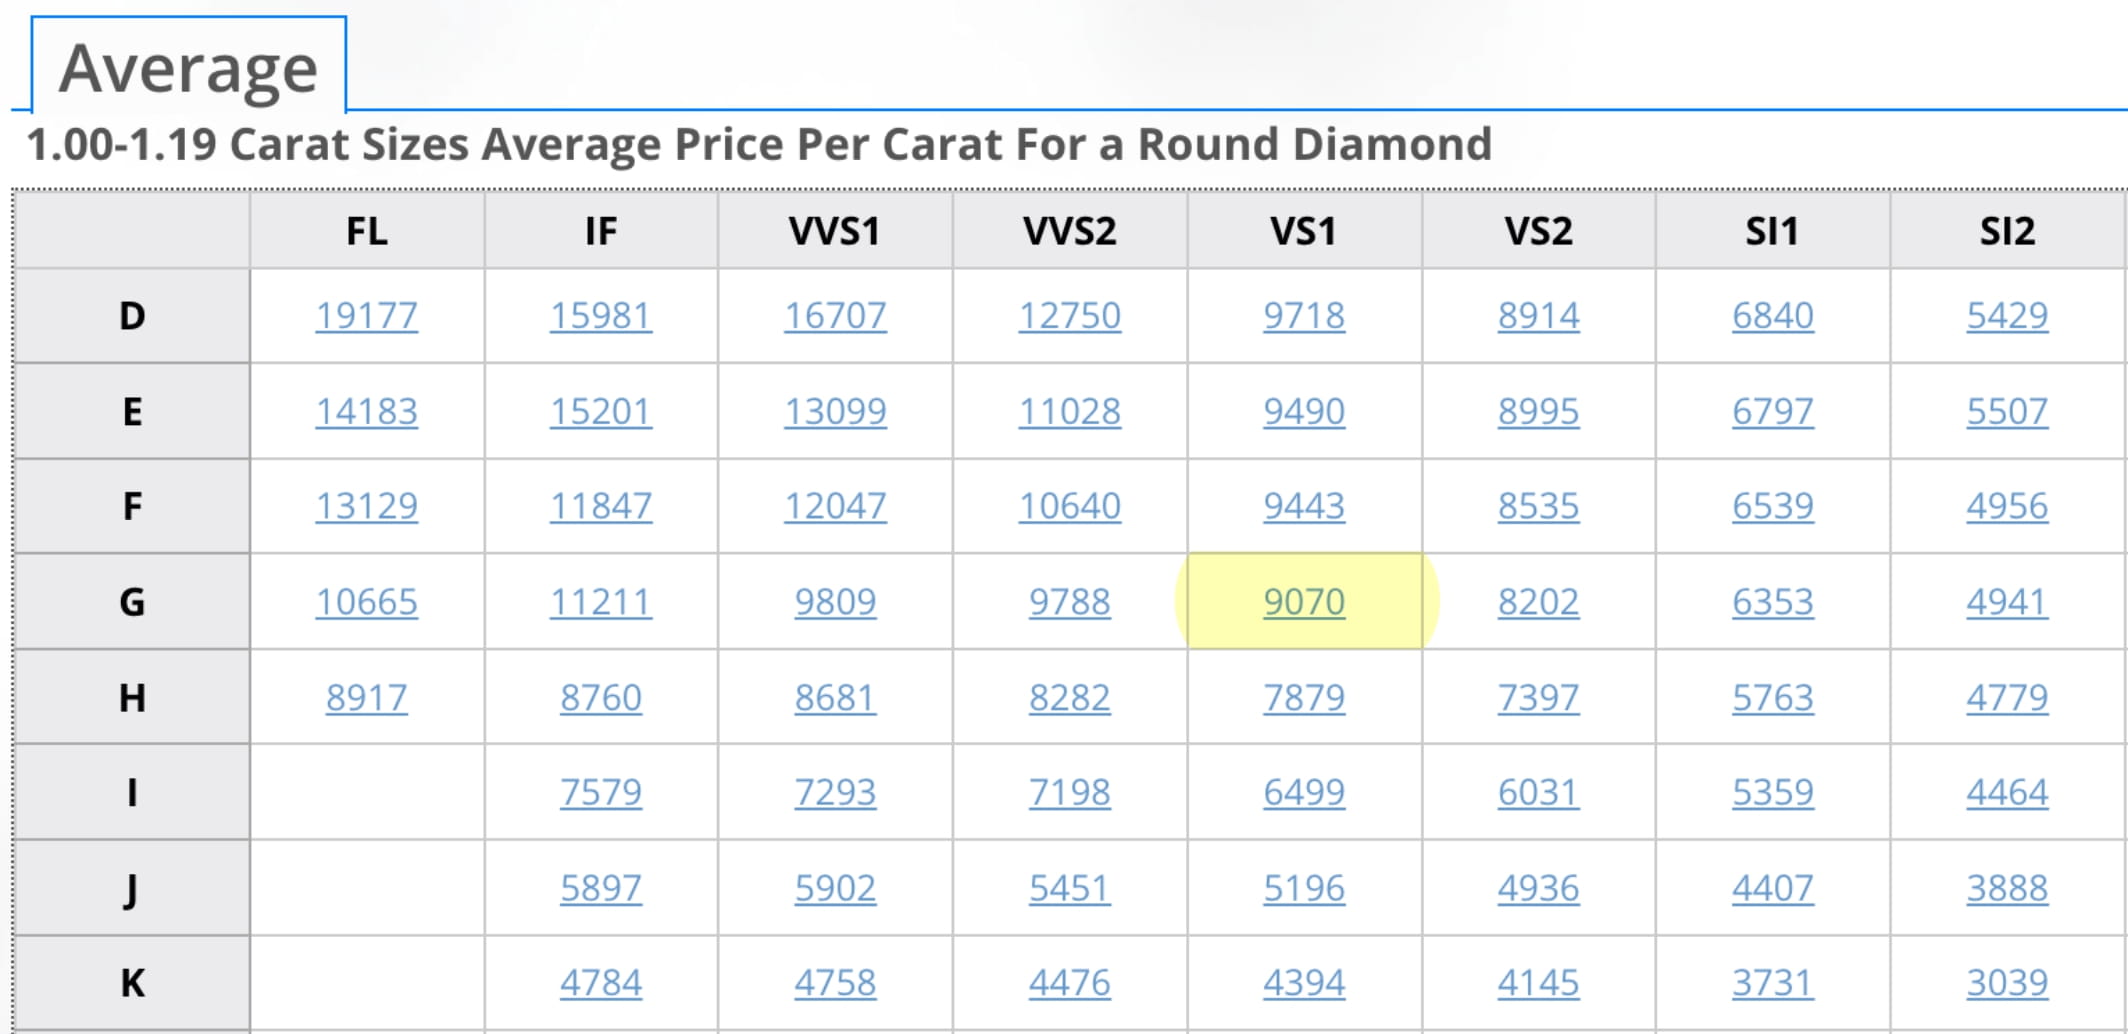 Carat Sizes Average Price Per Carat For a Round Diamond - September 2022